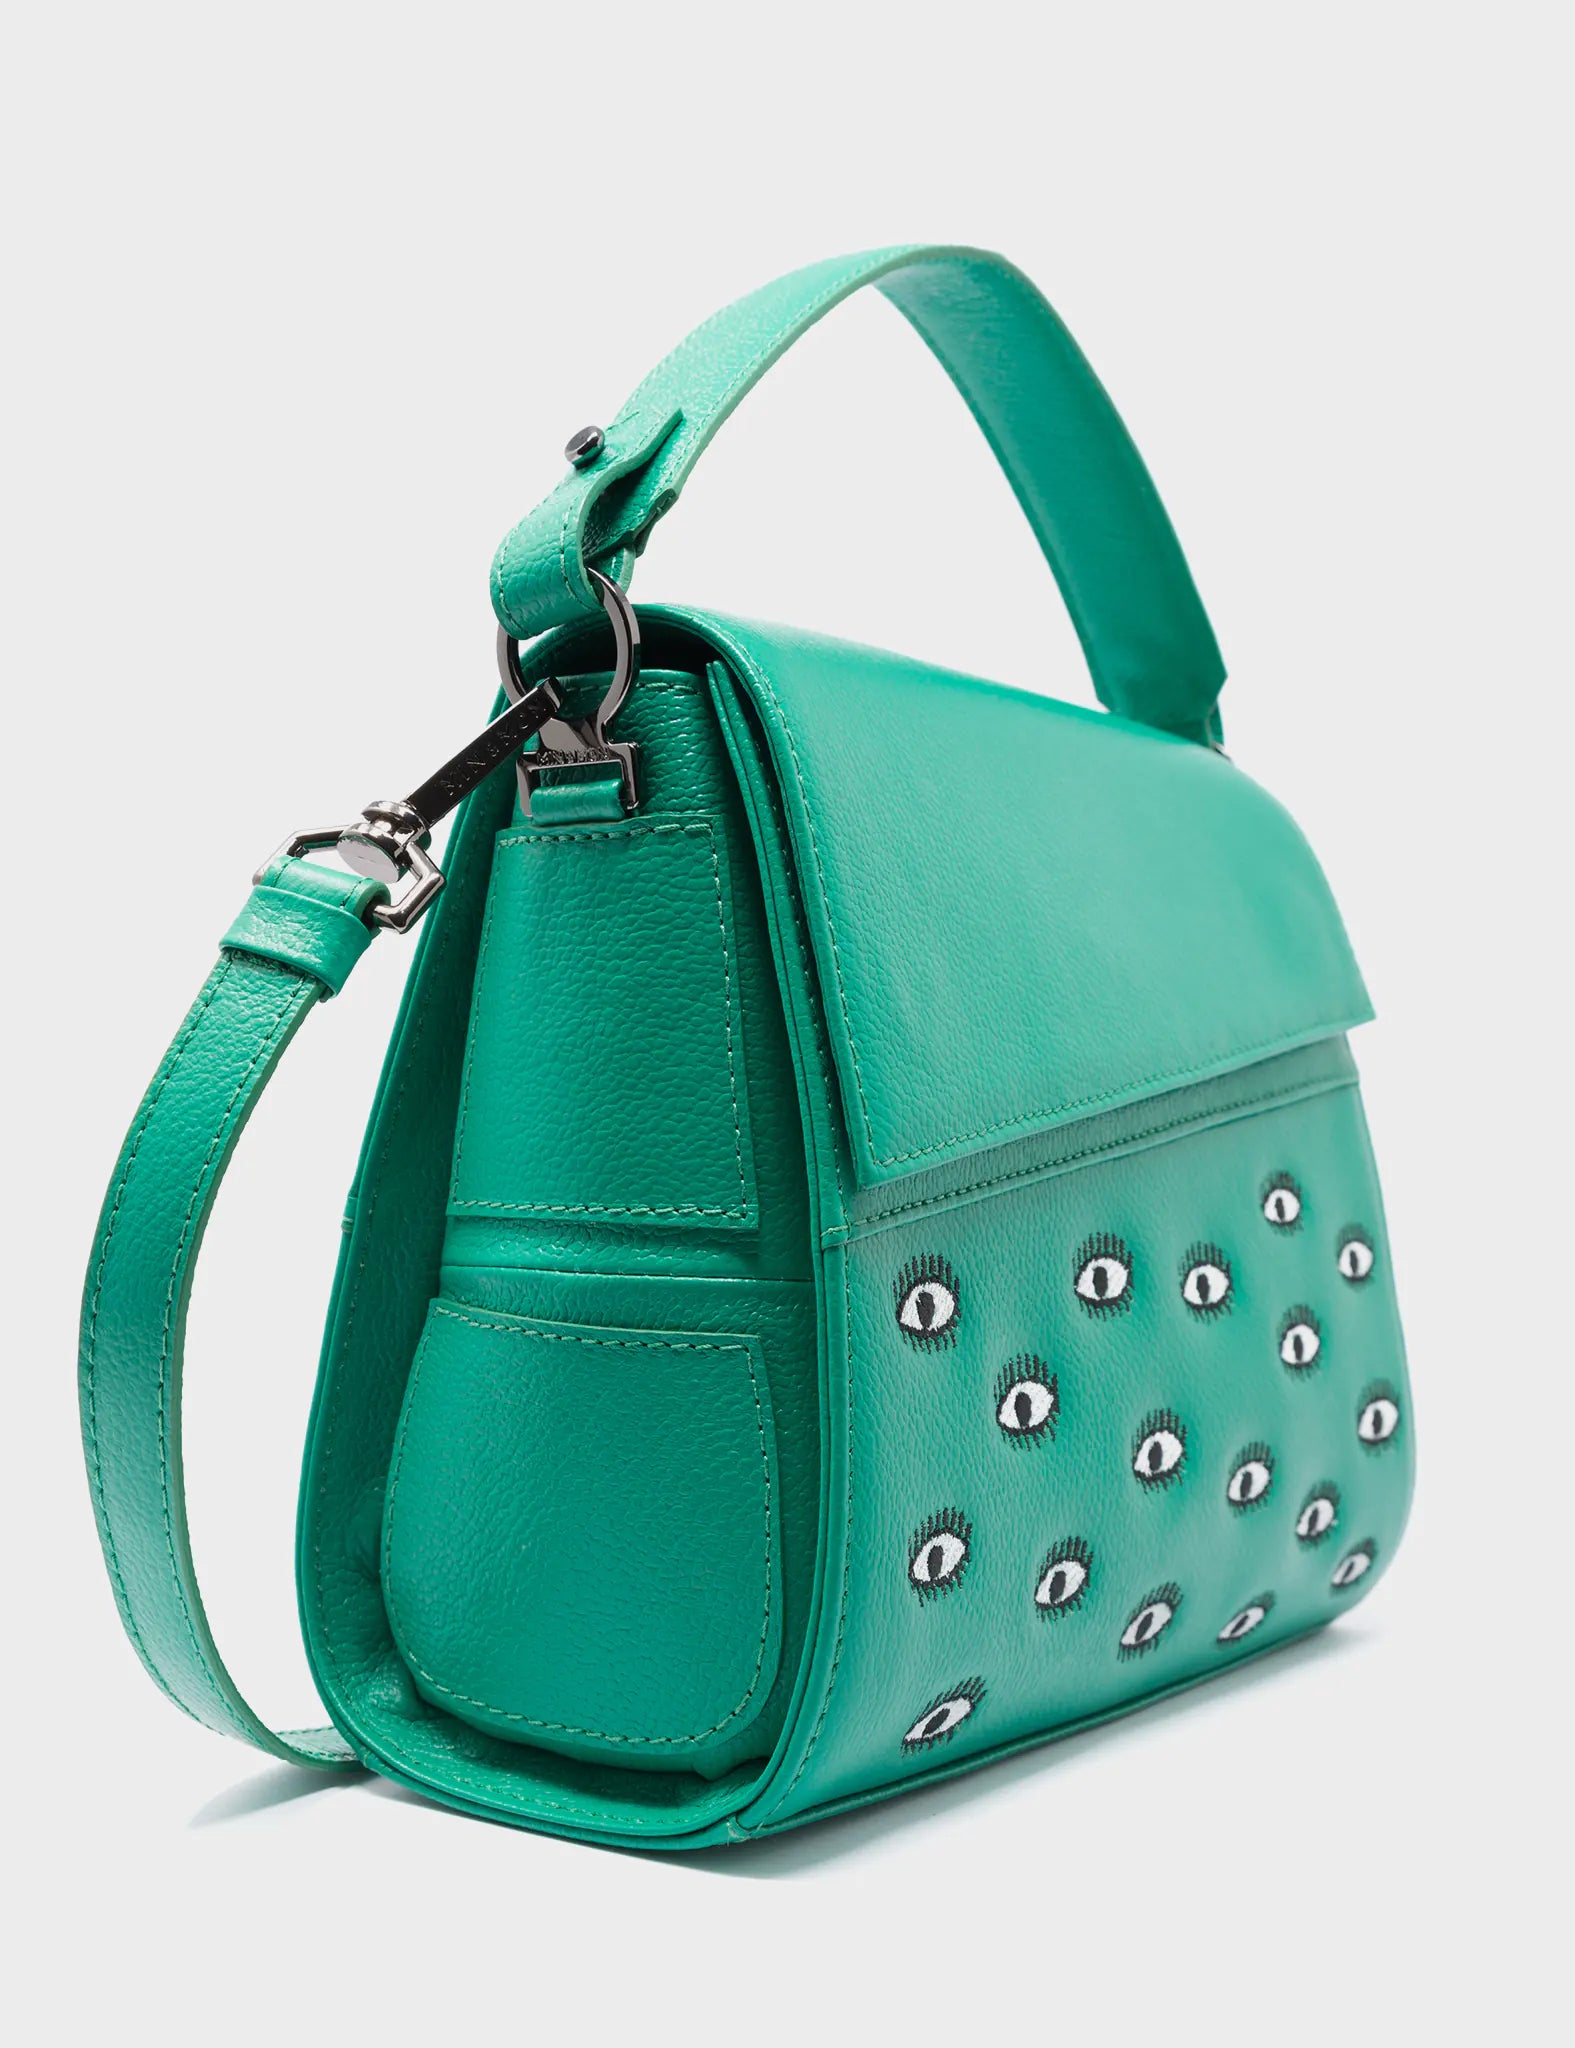 Anastasio Mini Crossbody Handbag Deep Green Leather - All Over Eyes Embroidery - Side